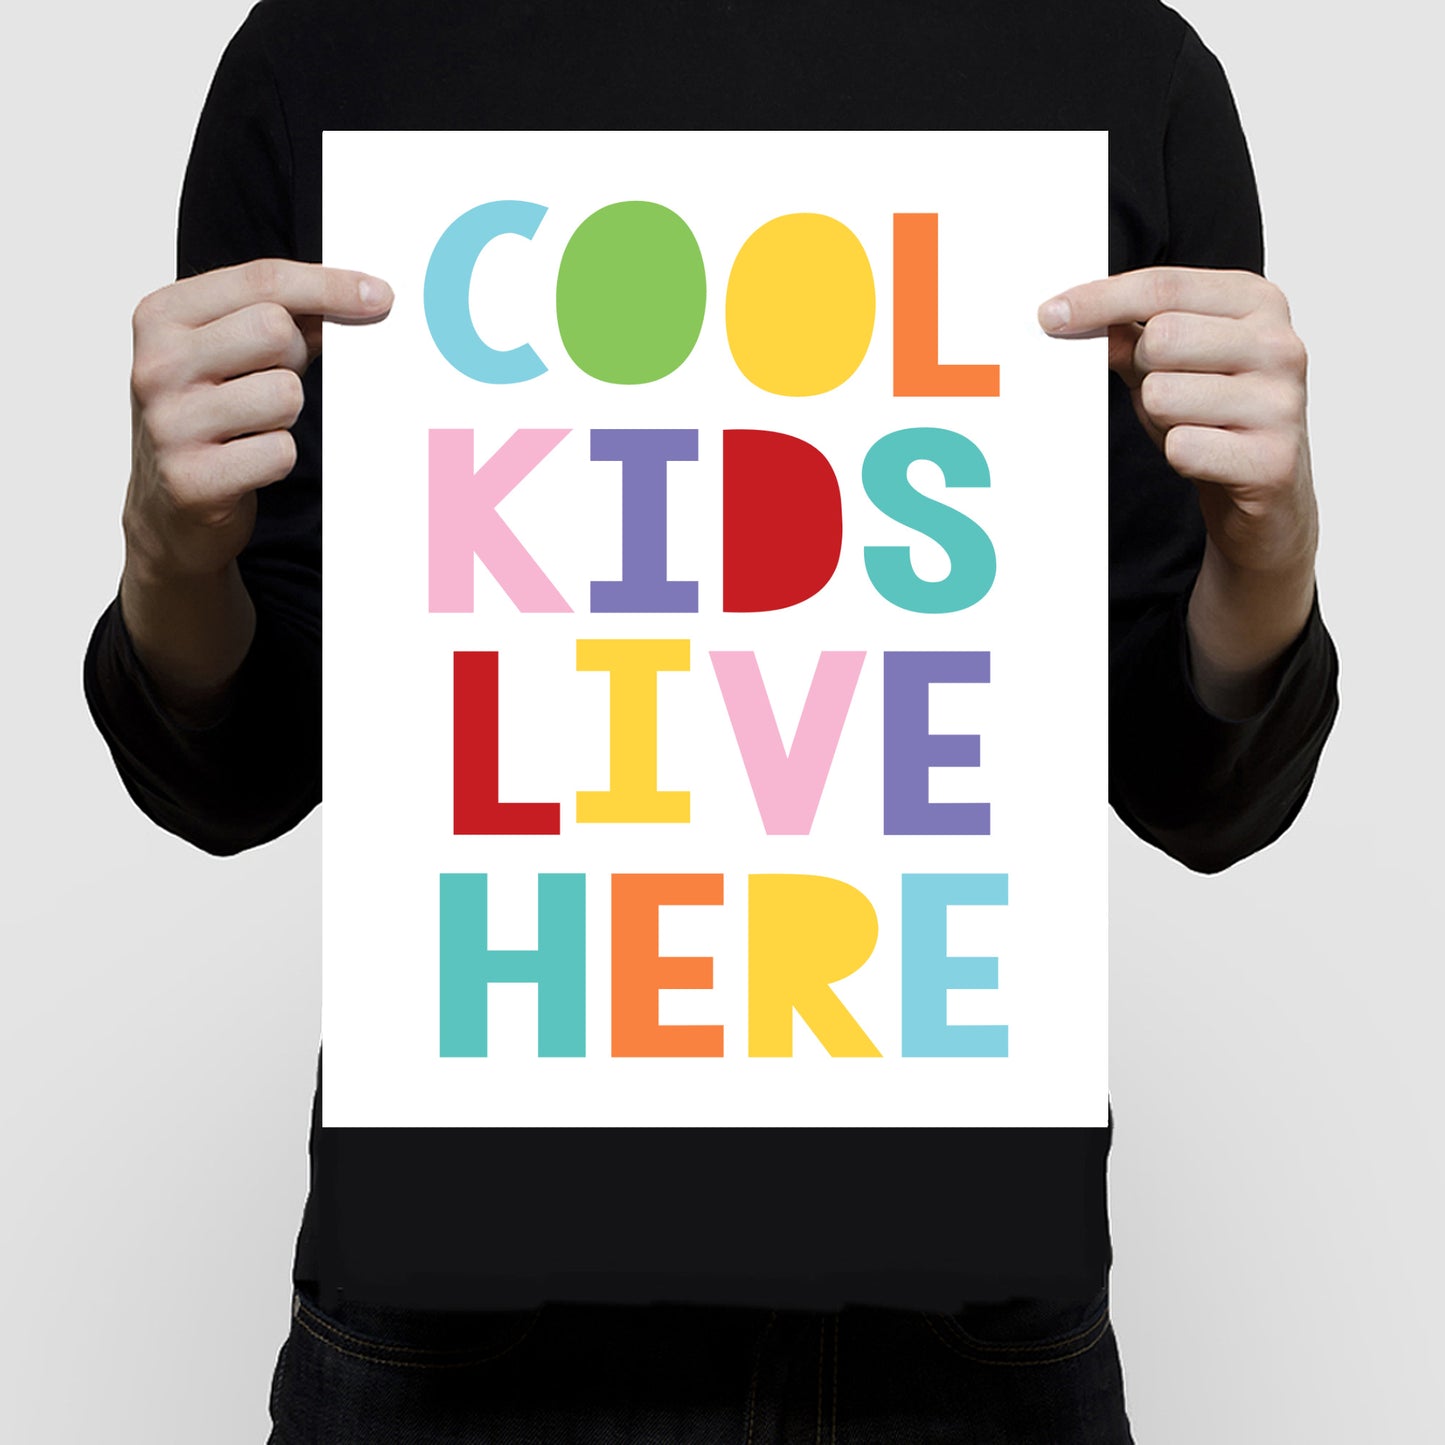 Cool kids live here print